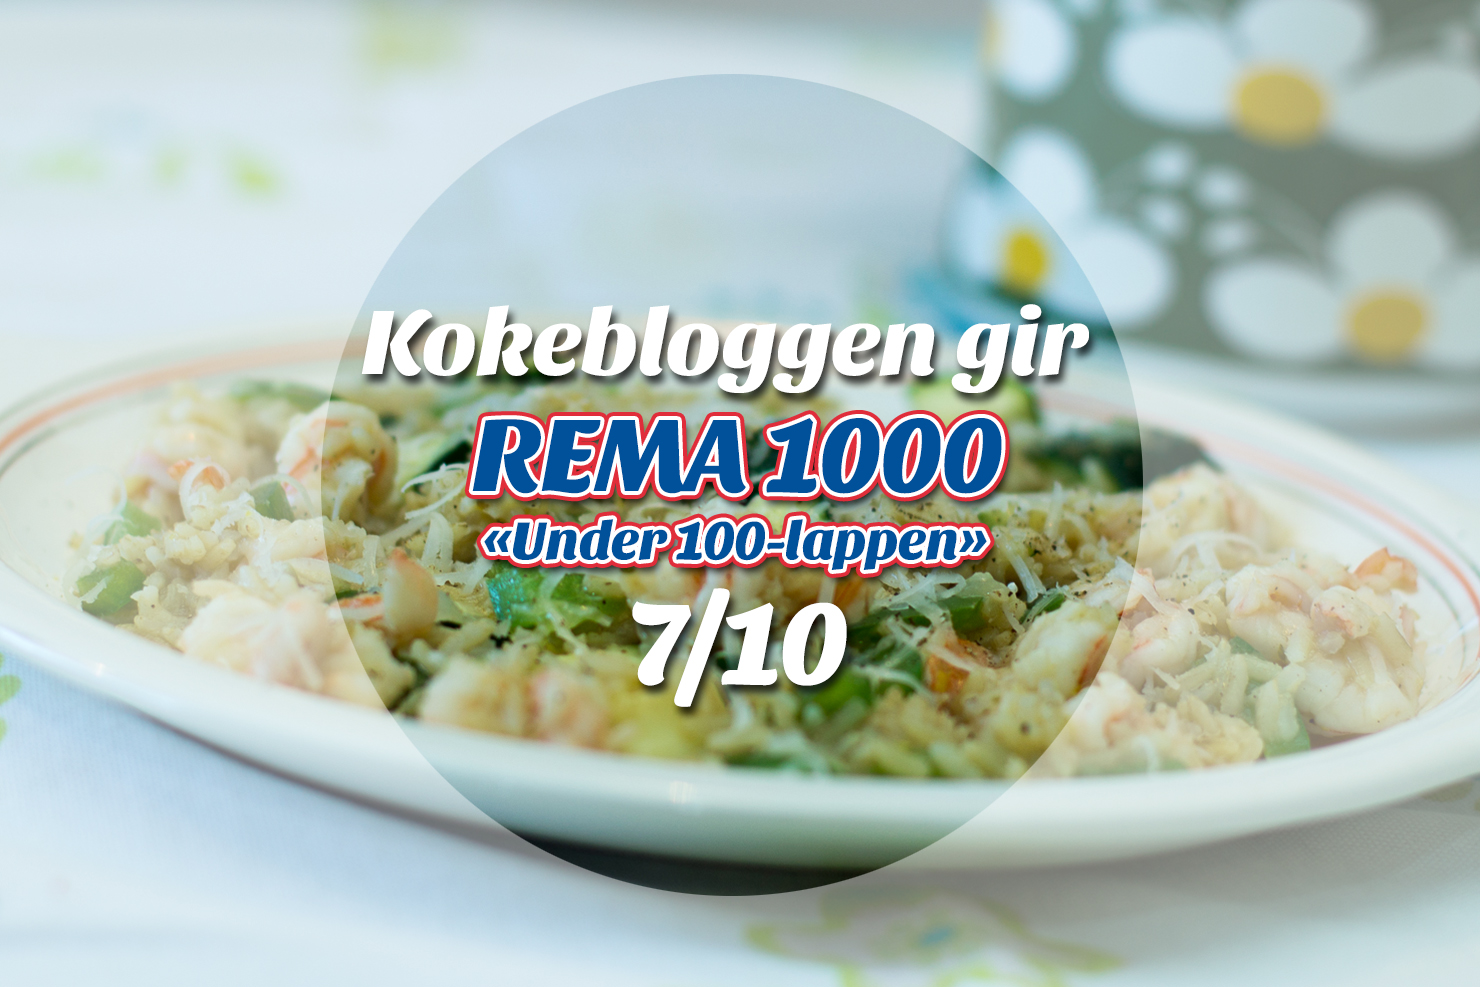 Rema 1000 | Kokebloggen har testet Rema 1000 sitt under 100-lappen-konsept